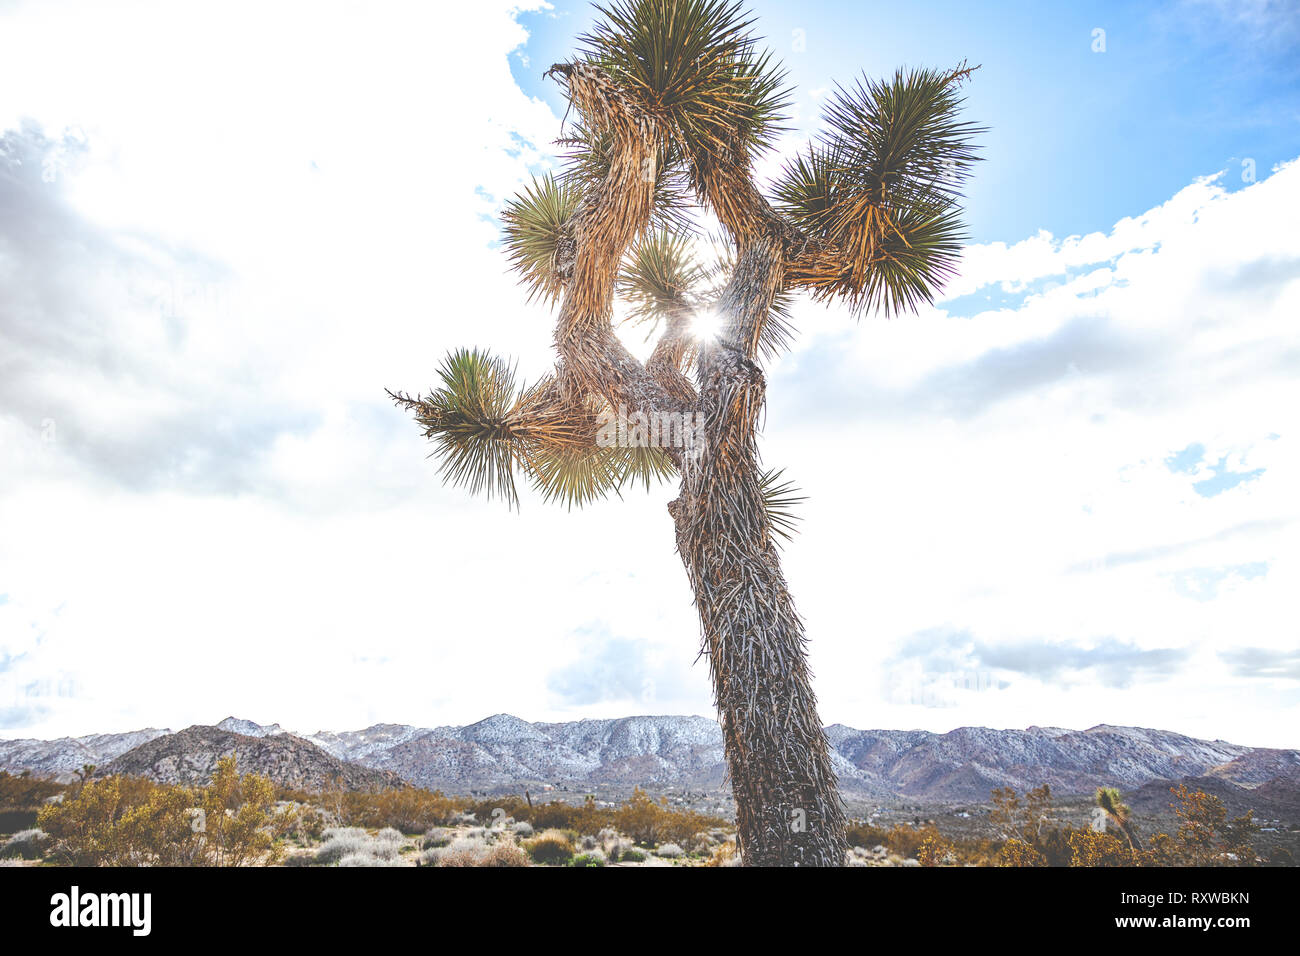 Wild joshua trees against the desert landscape of Joshua Tree, California. Stock Photo